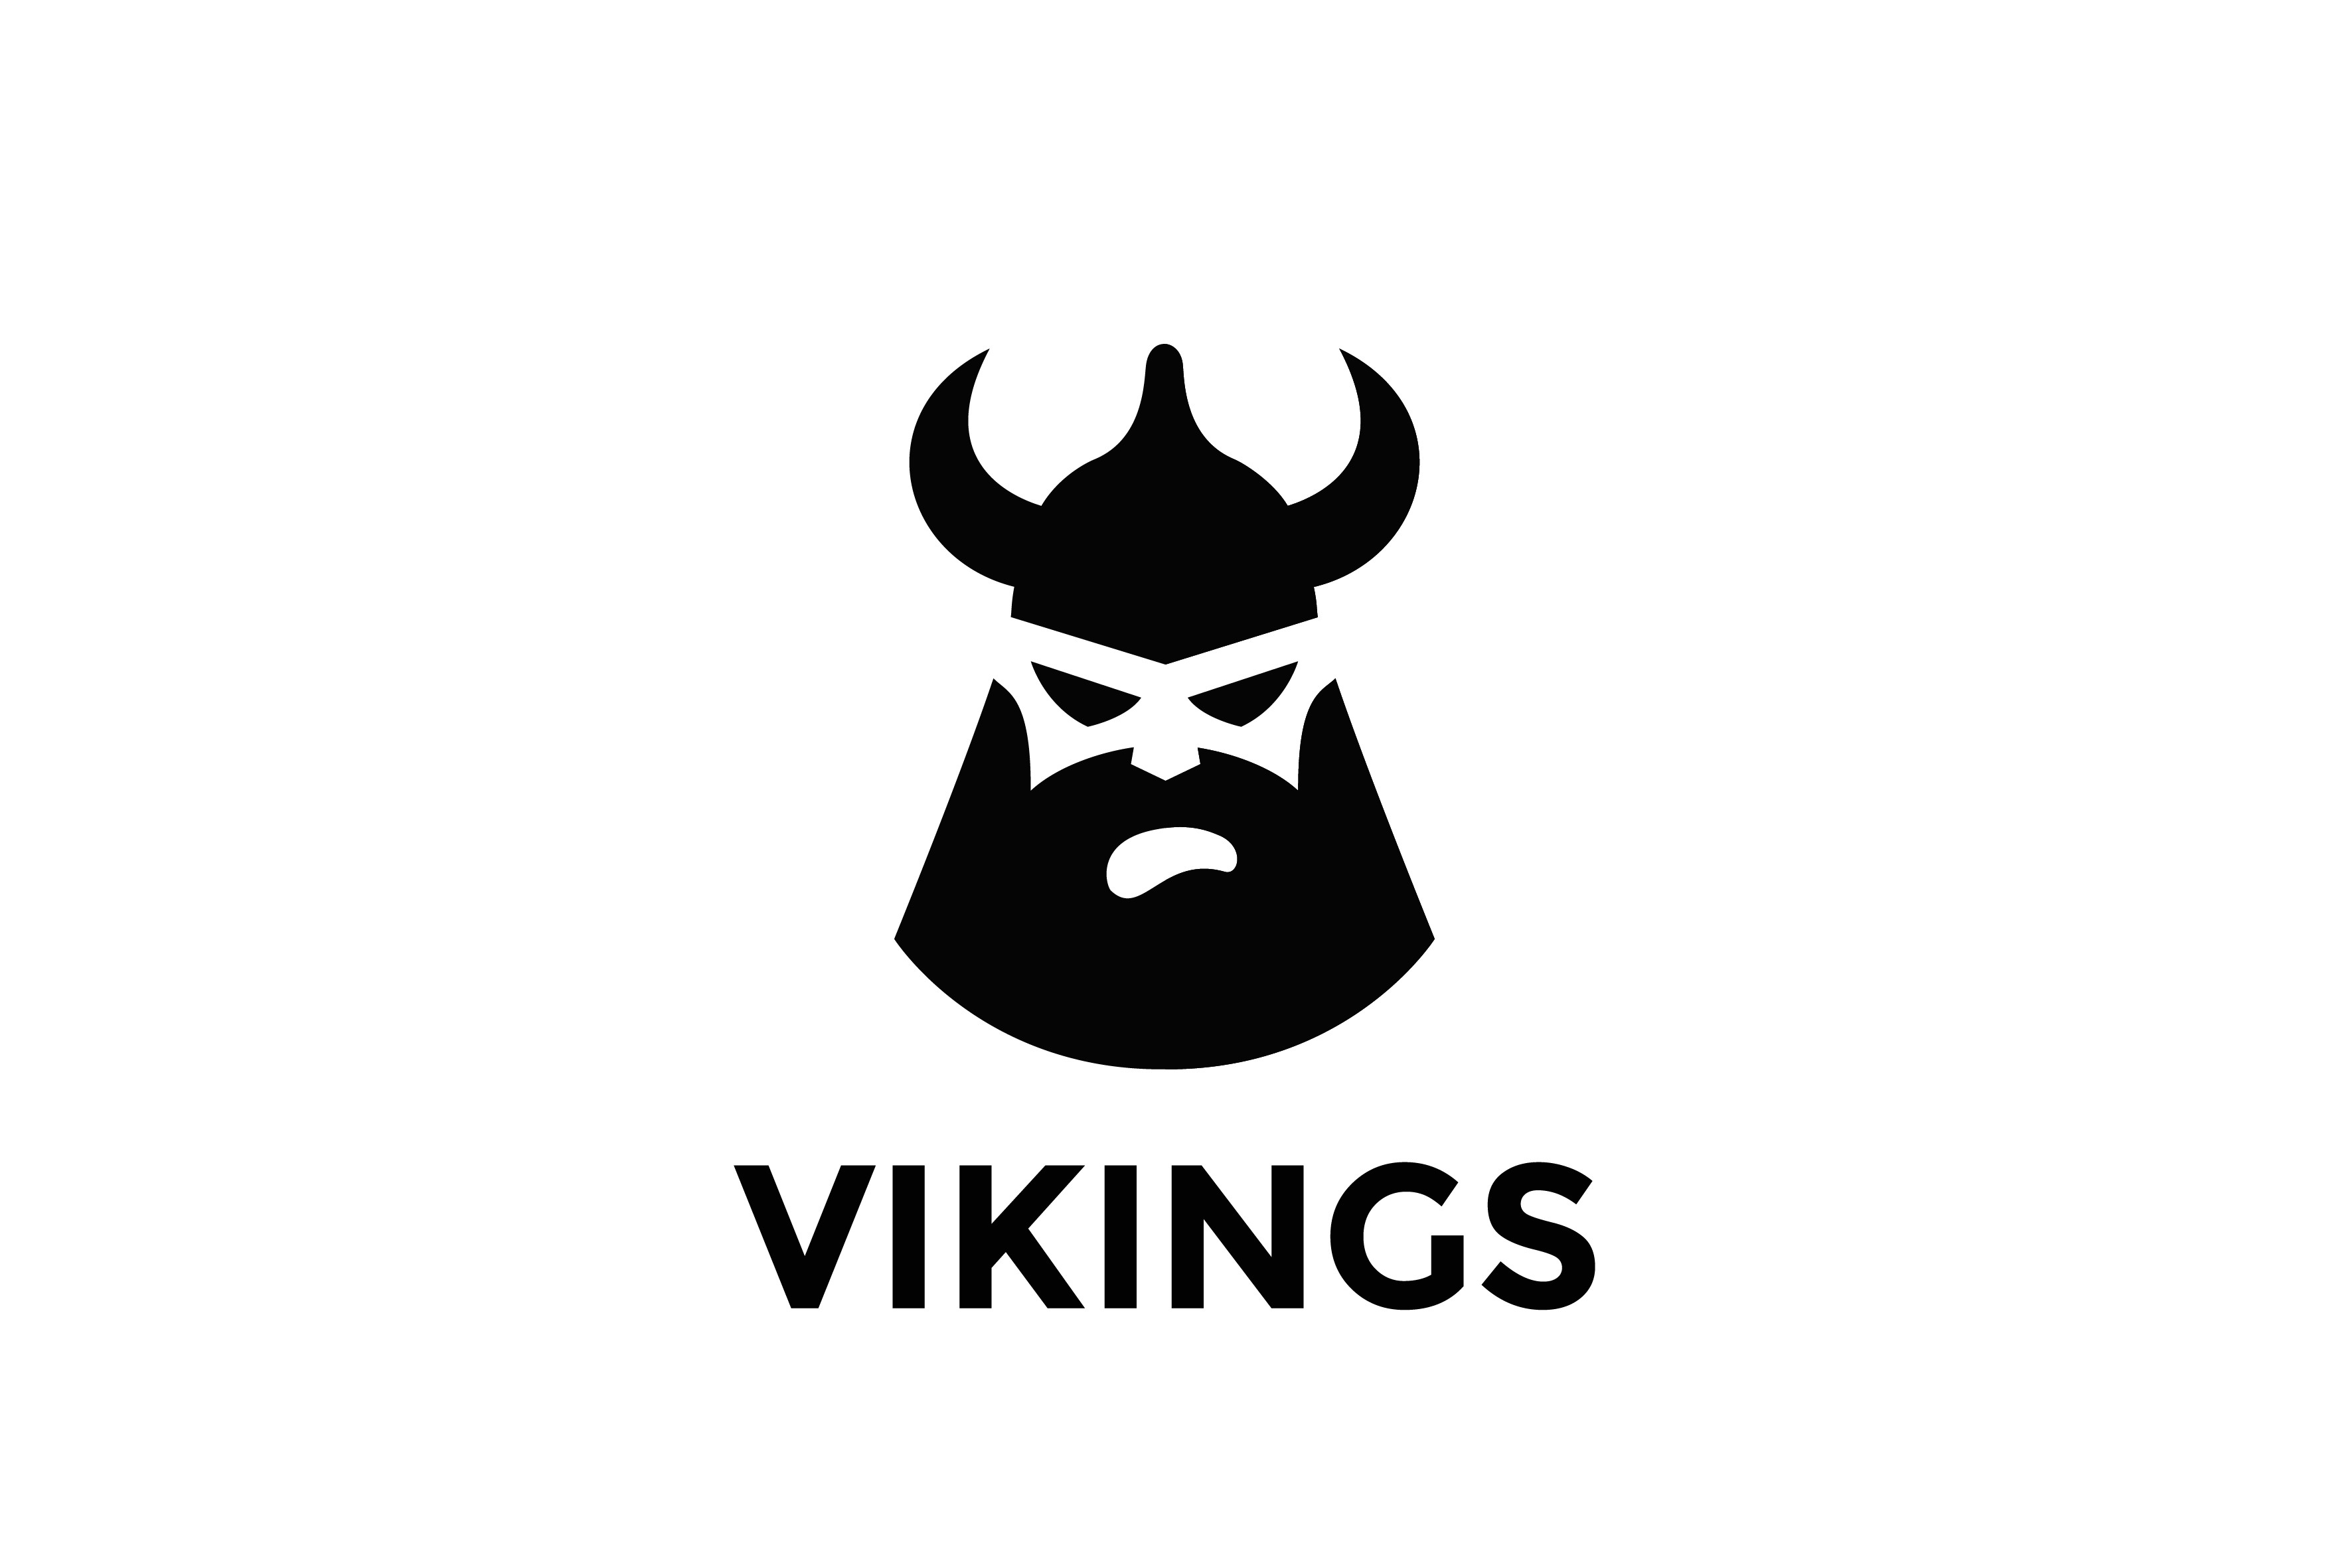 Vikings shops